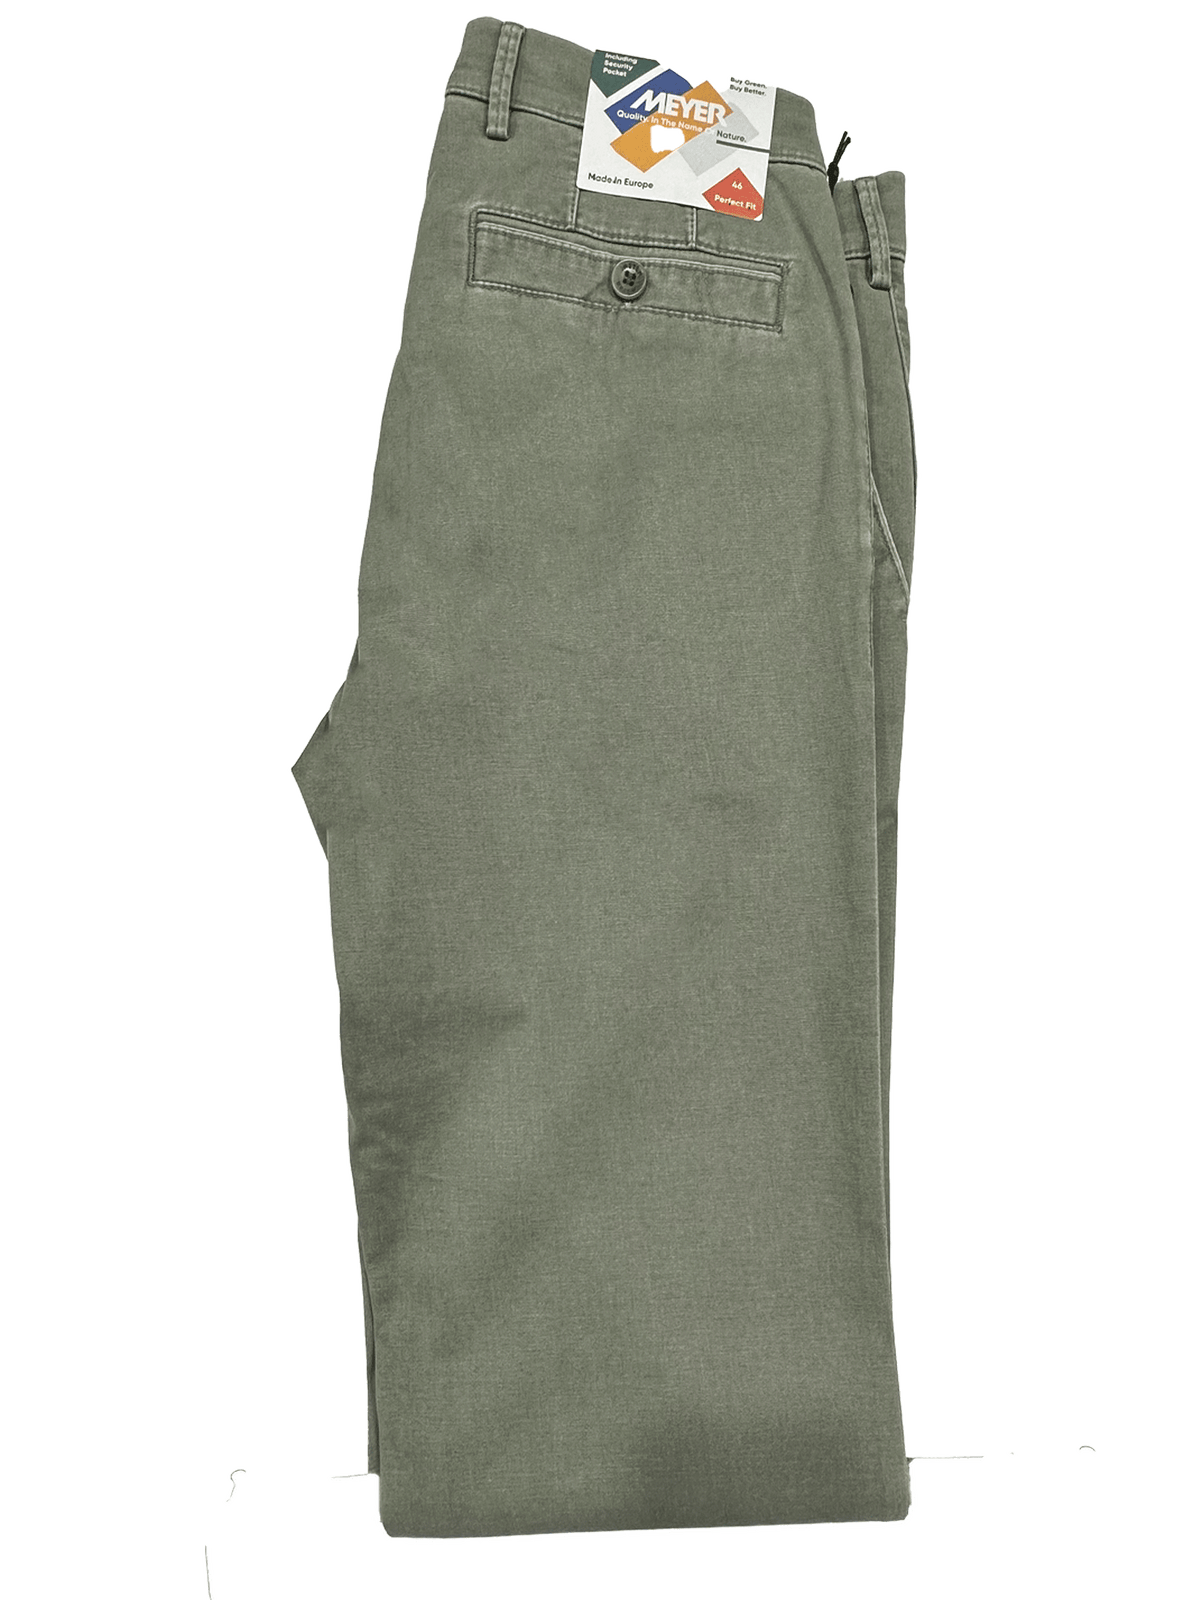 https://harrysformenswear.com.au/products/new-york-5054-25-green